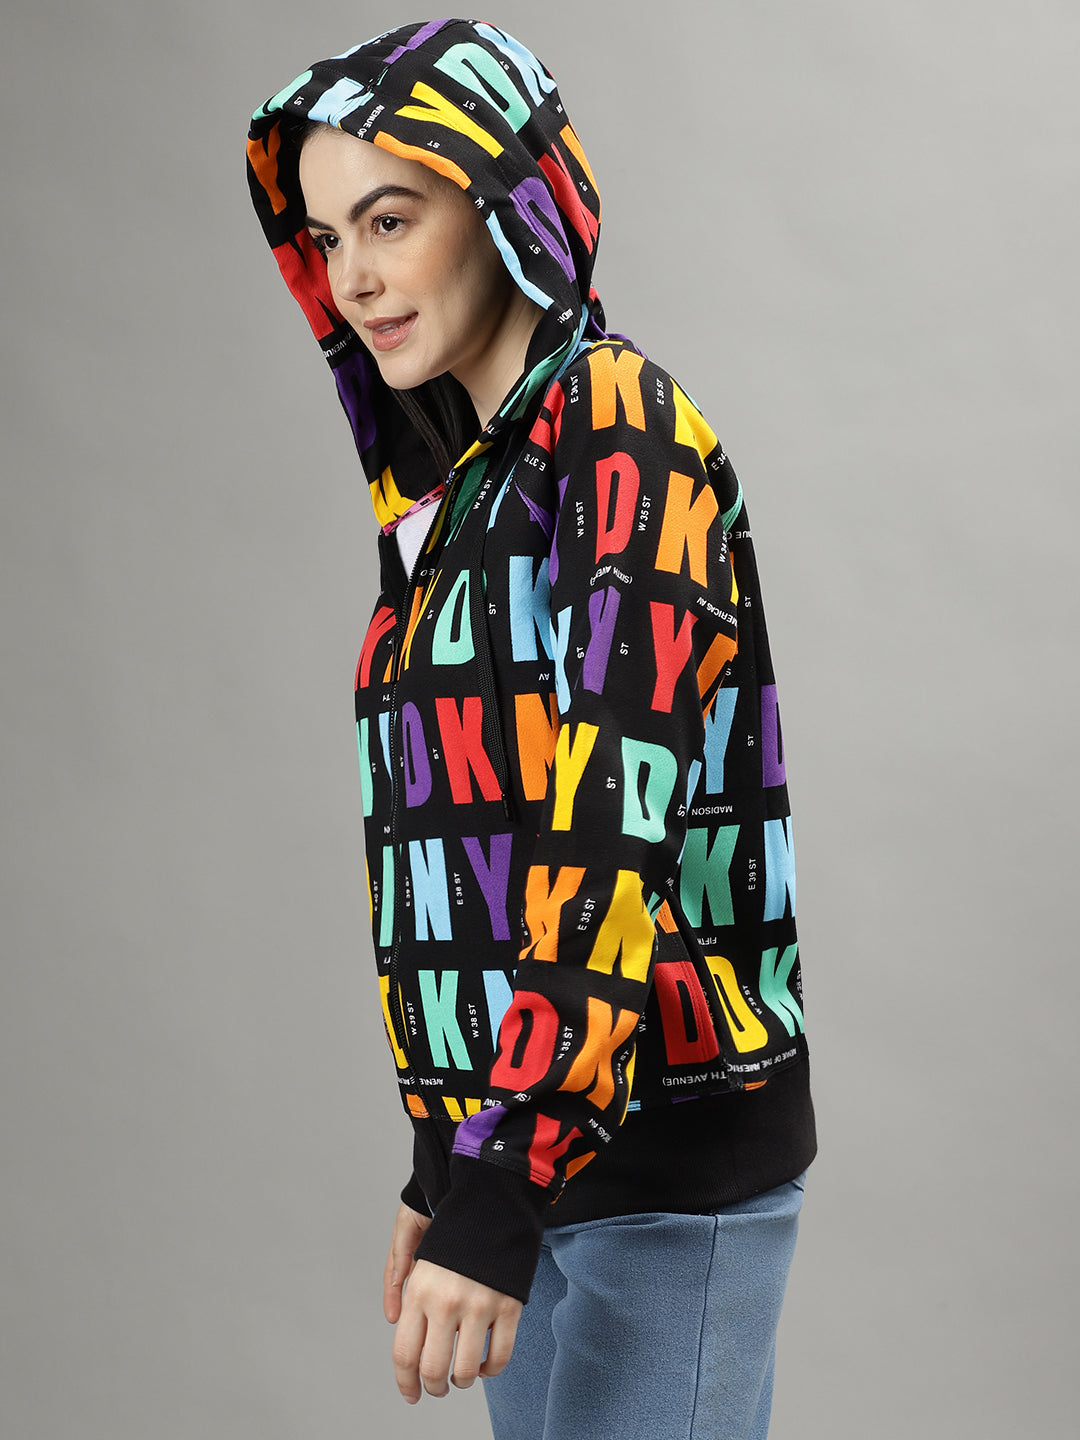 DKNY Womens Rain Coat-3 Colors! SALE 70% off 0 Retail!